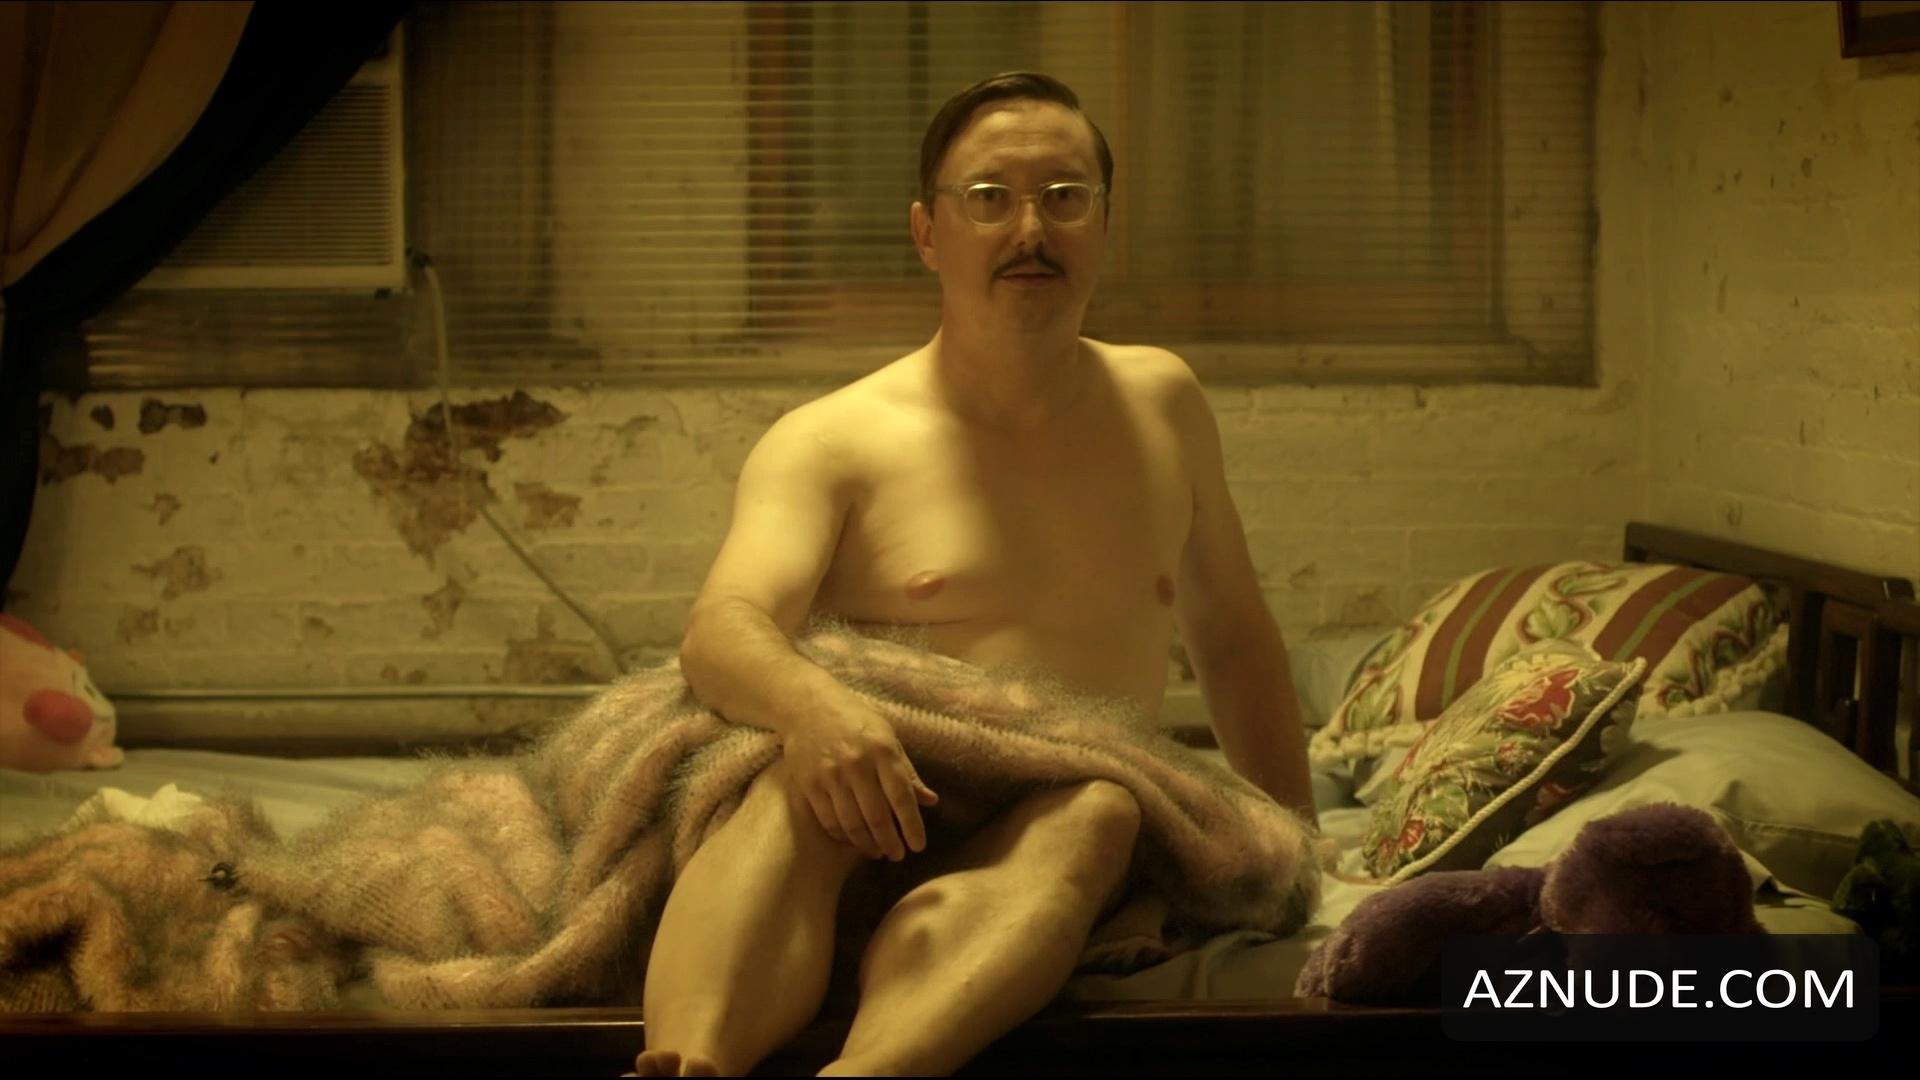 John Hodgman Nude Aznude Men